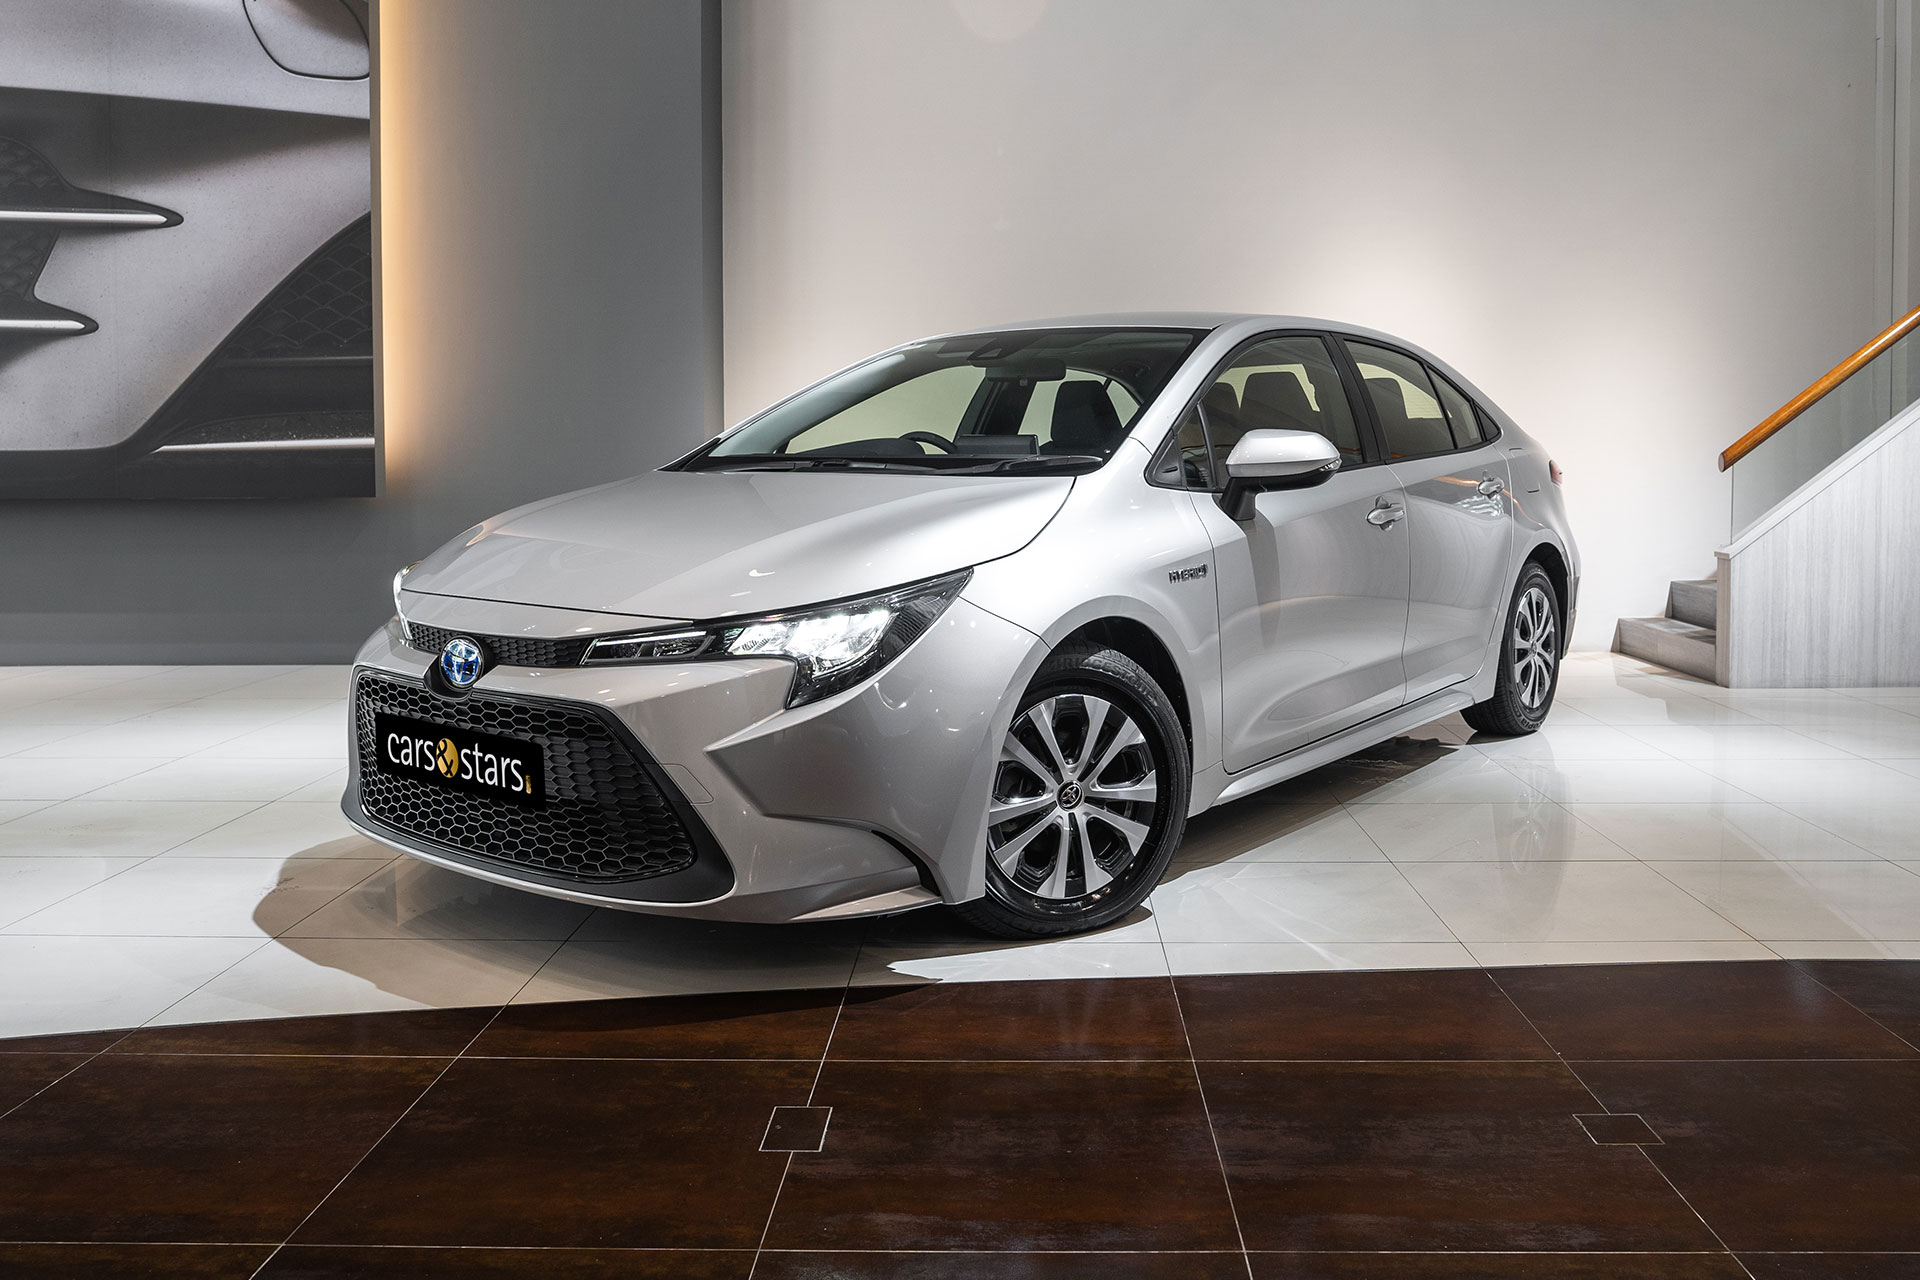 New Toyota Corolla Sedan Hybrid in Singapore | On Sale at Cars & Stars